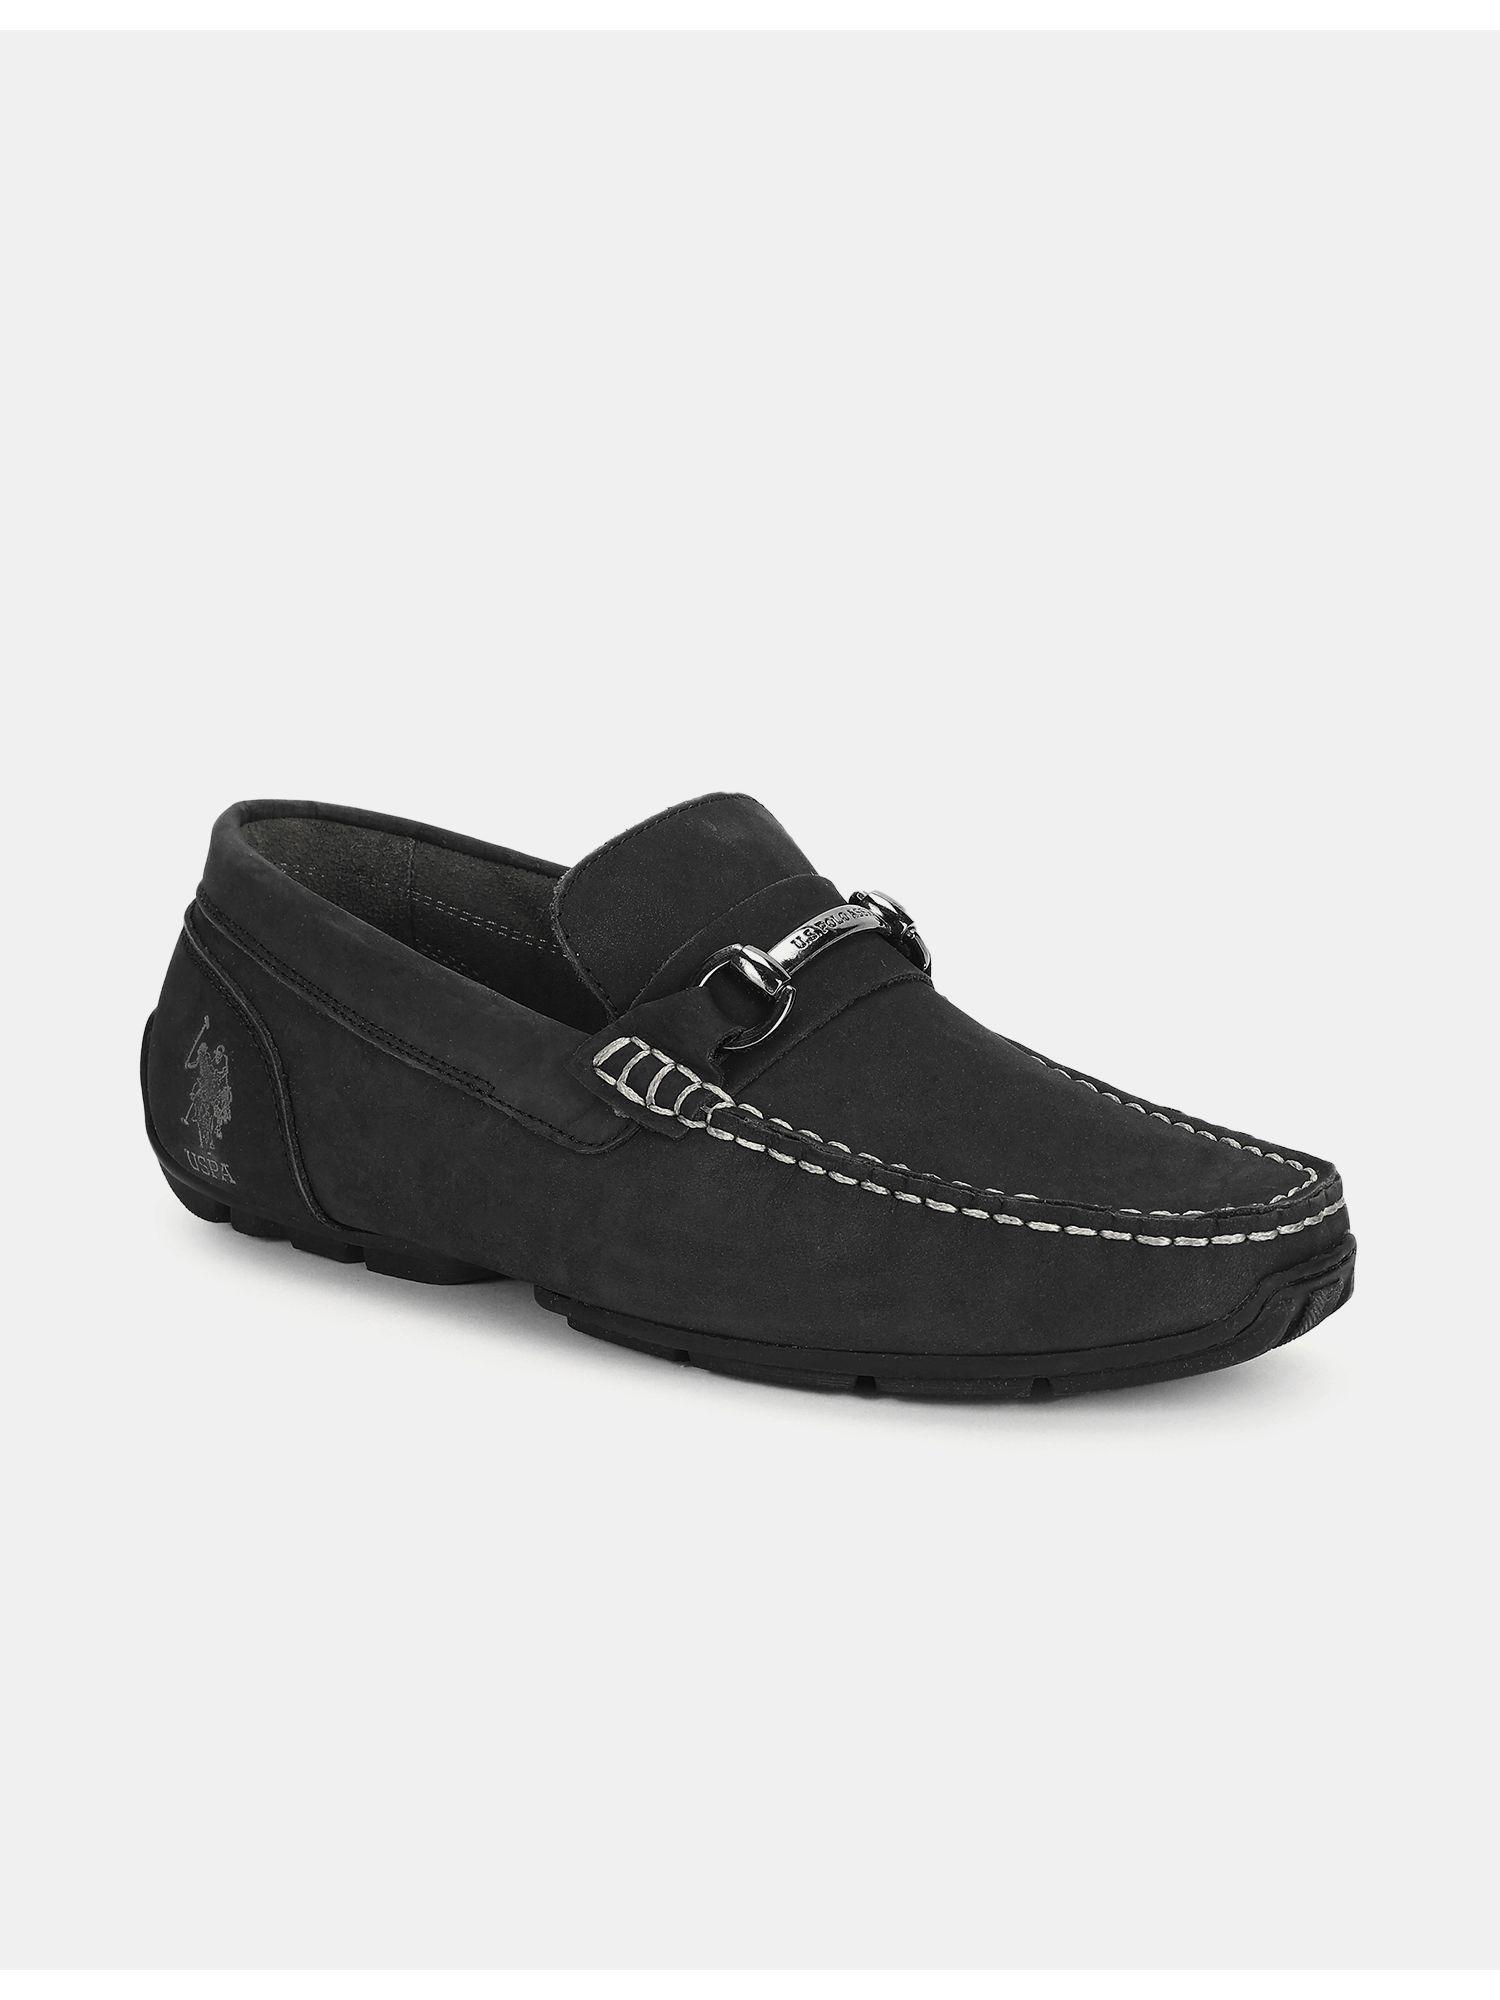 hebbar-3.0-mens-casual-solid-black-sneakers